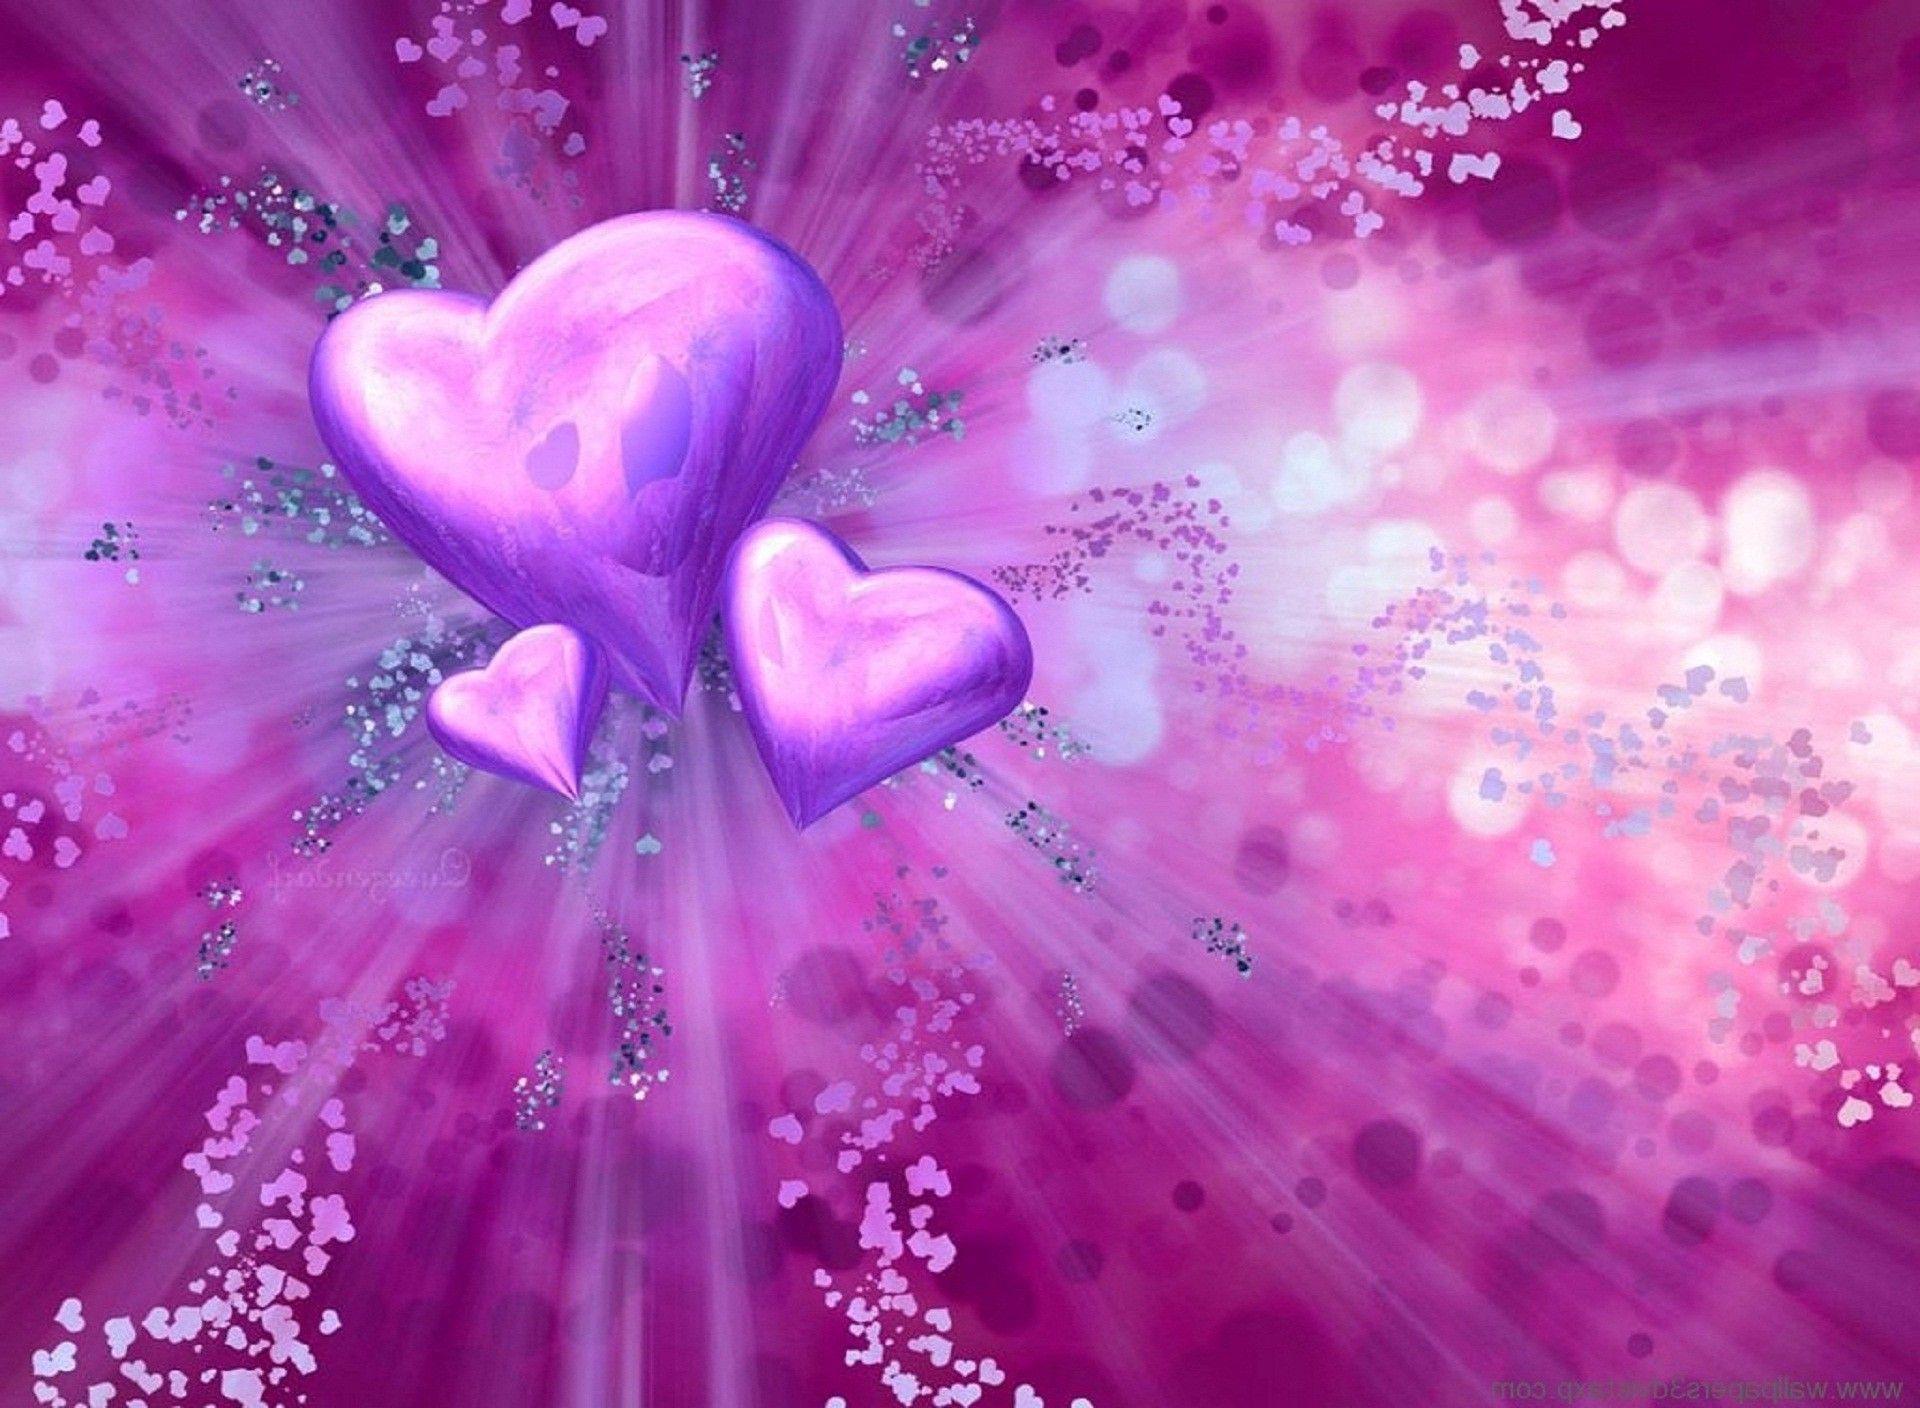 Cute Love 3D Background Wallpaper. Paravu.com